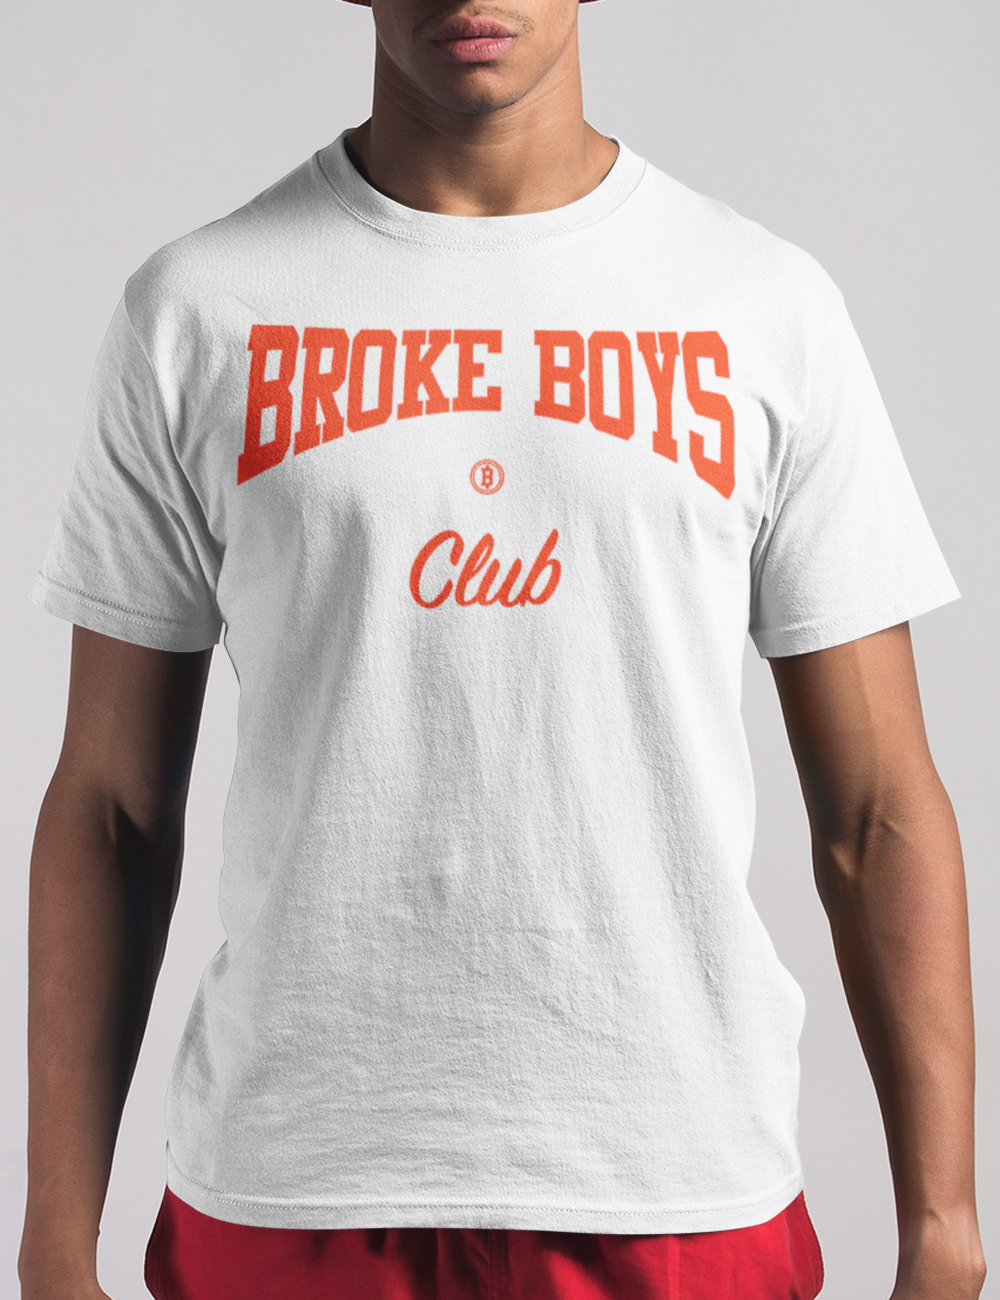 Broke Boys Club Red Logo | Men's Classic T-Shirt OniTakai